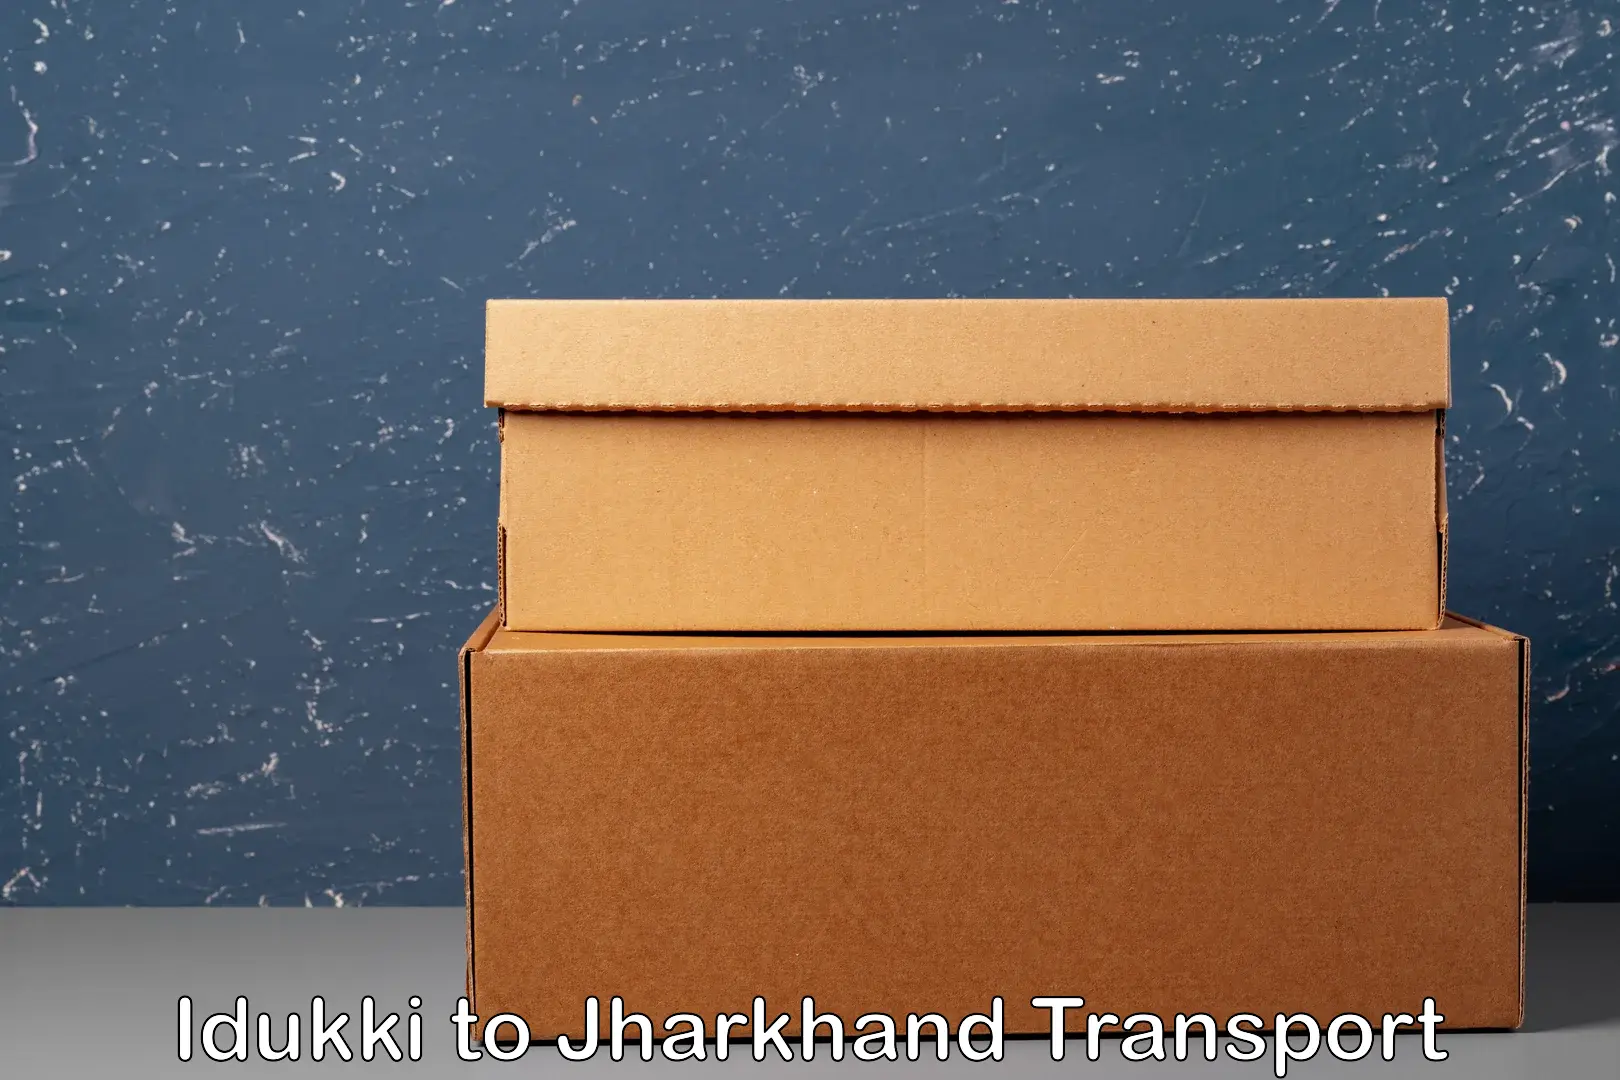 Container transport service Idukki to Jamshedpur